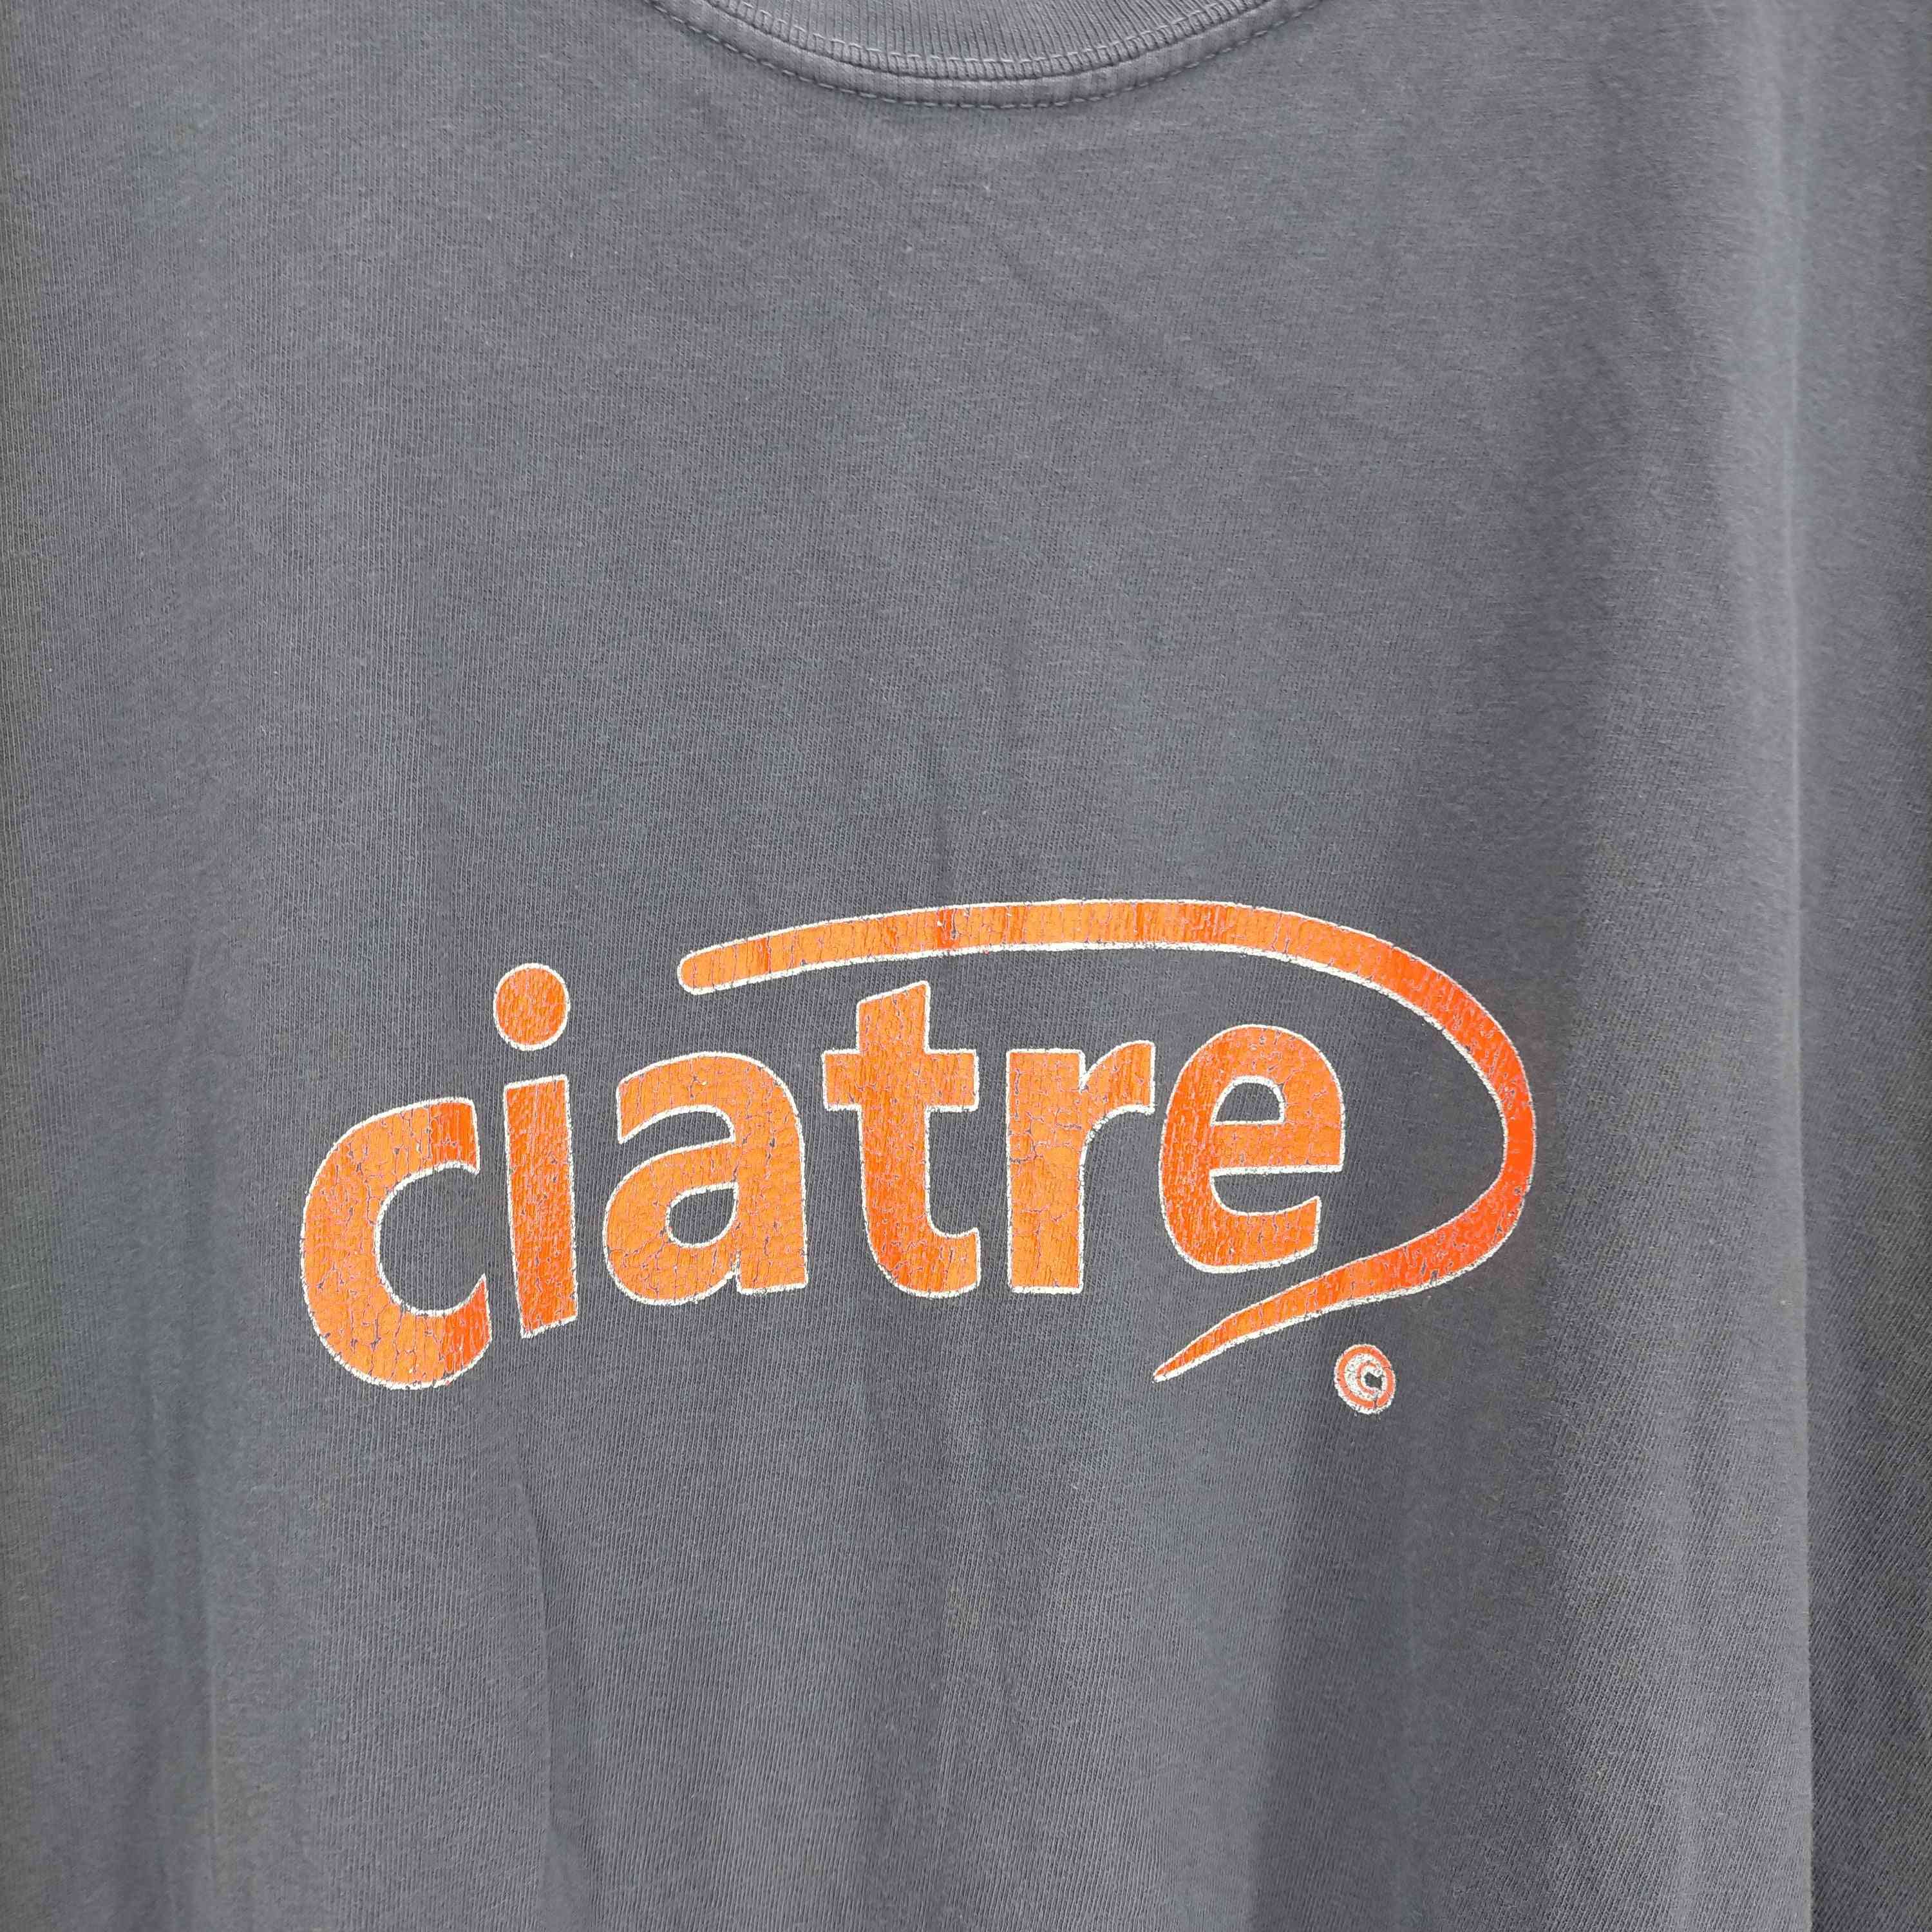 ciatre(シアター) ロゴ クラックプリント クルーネックTシャツ メンズ